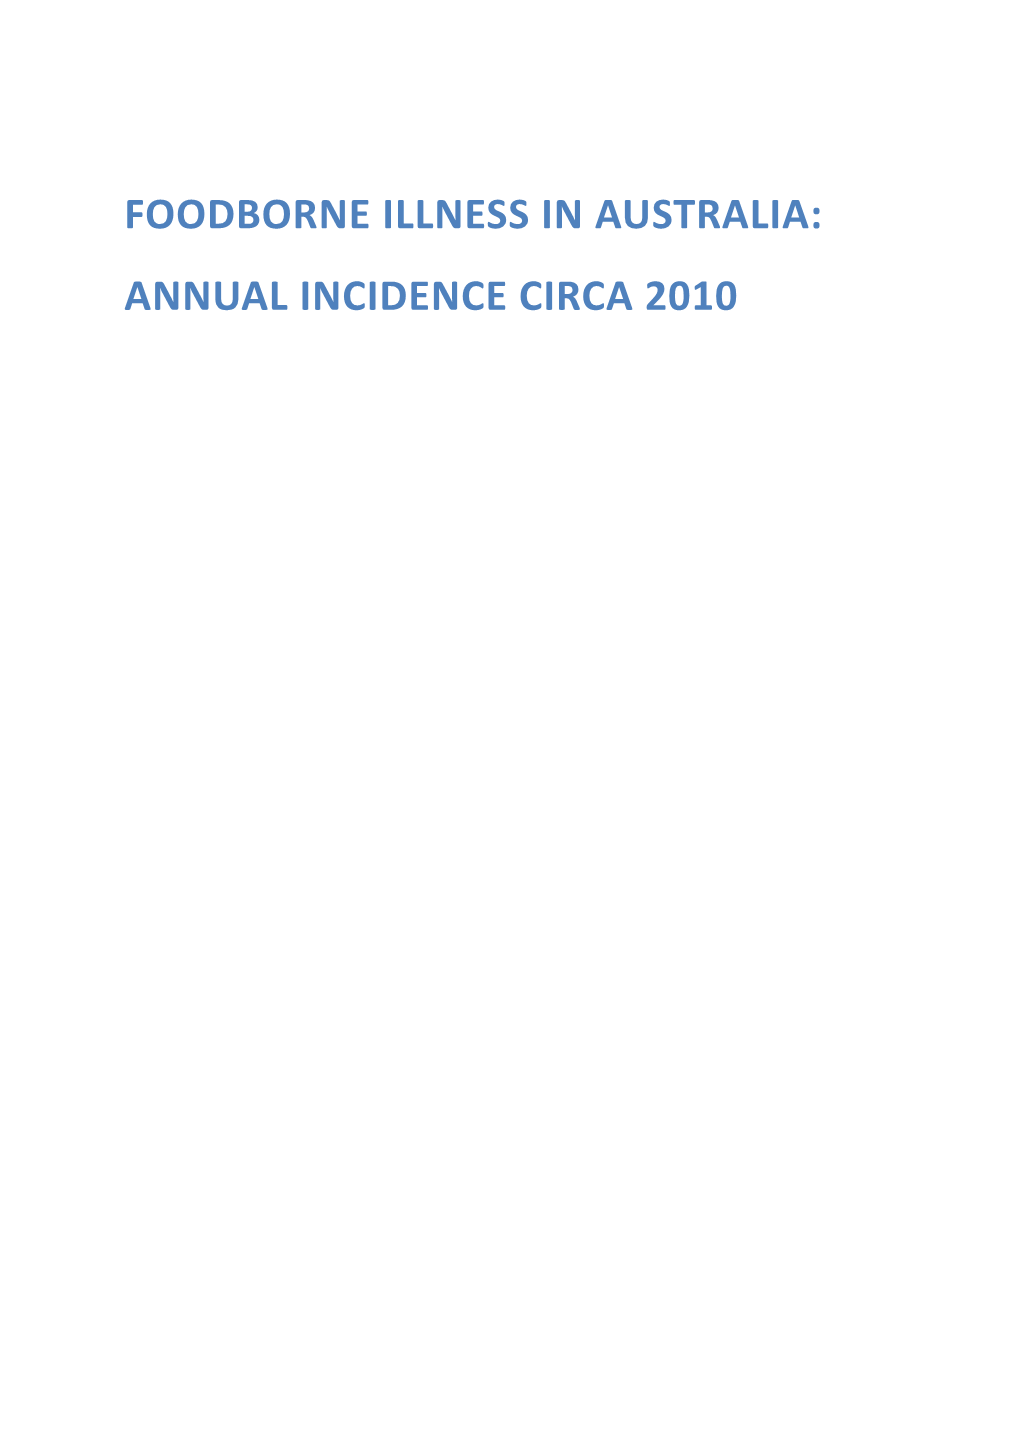 Foodborne Illness in Australia: Annual Incidence Circa 2010